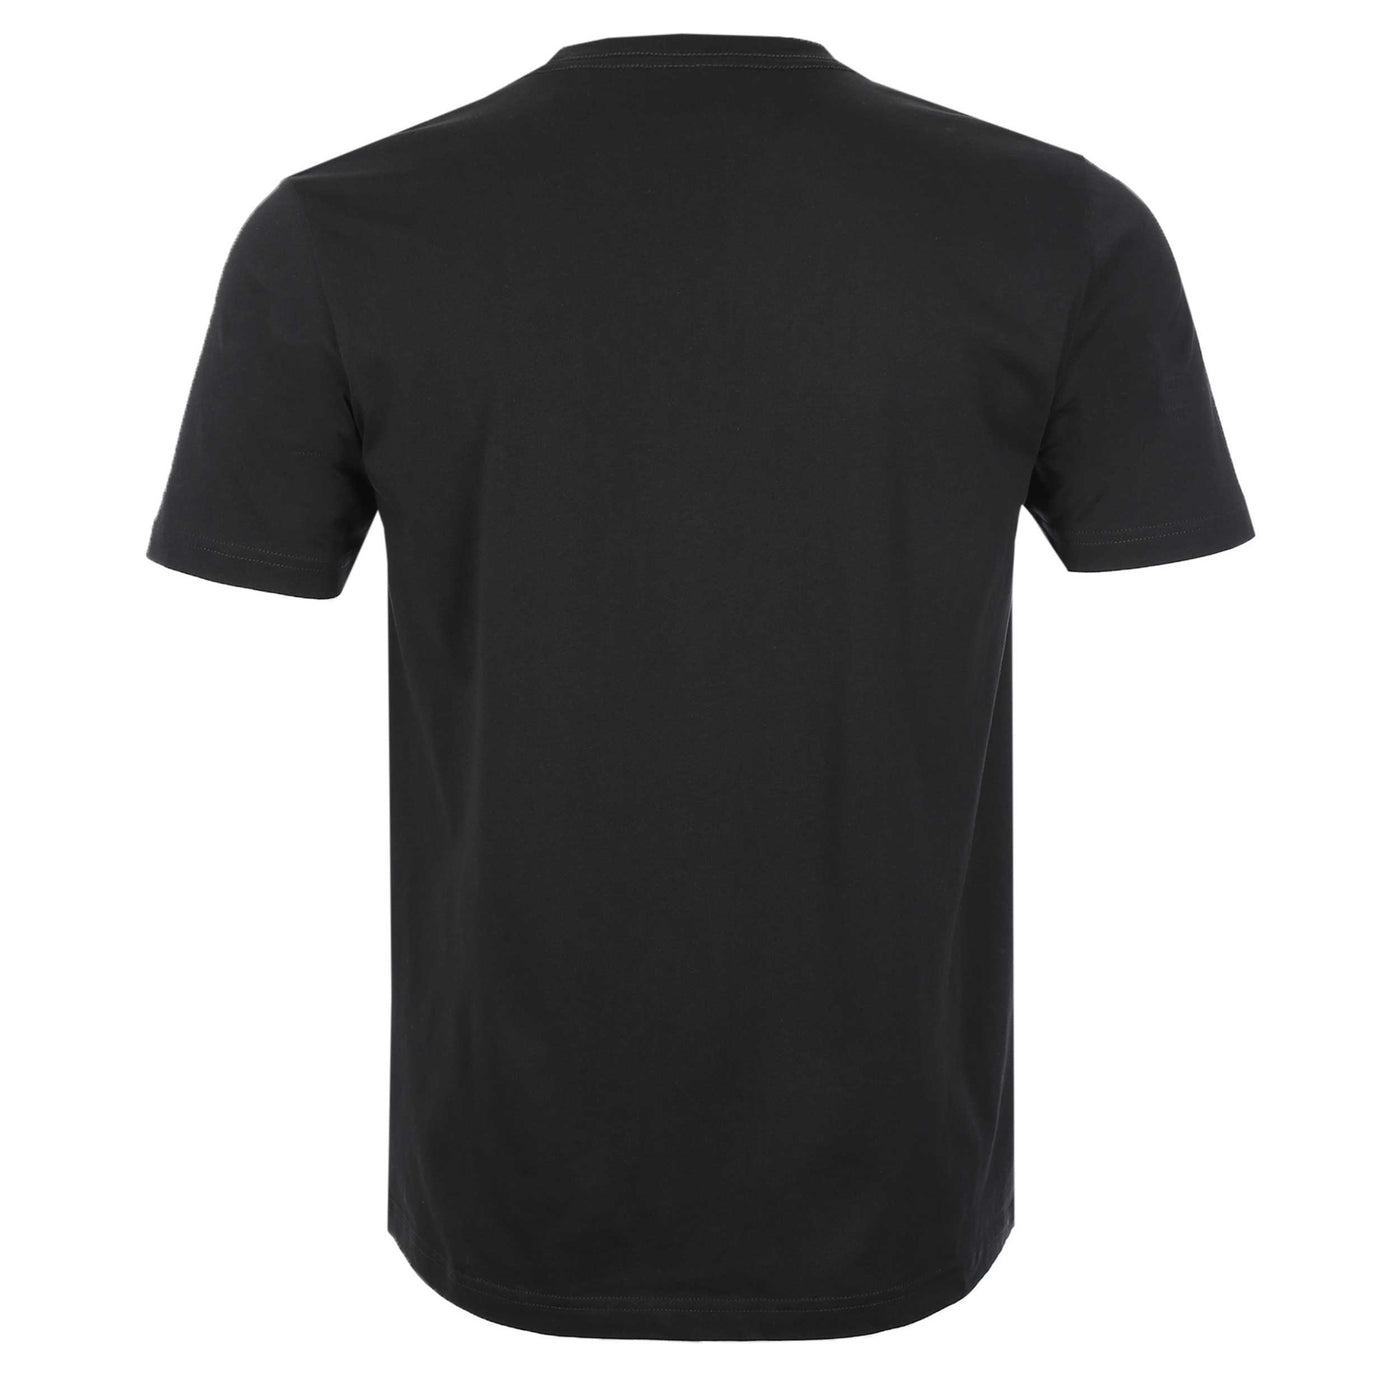 Paul Smith Linear Skull T Shirt in Black Back